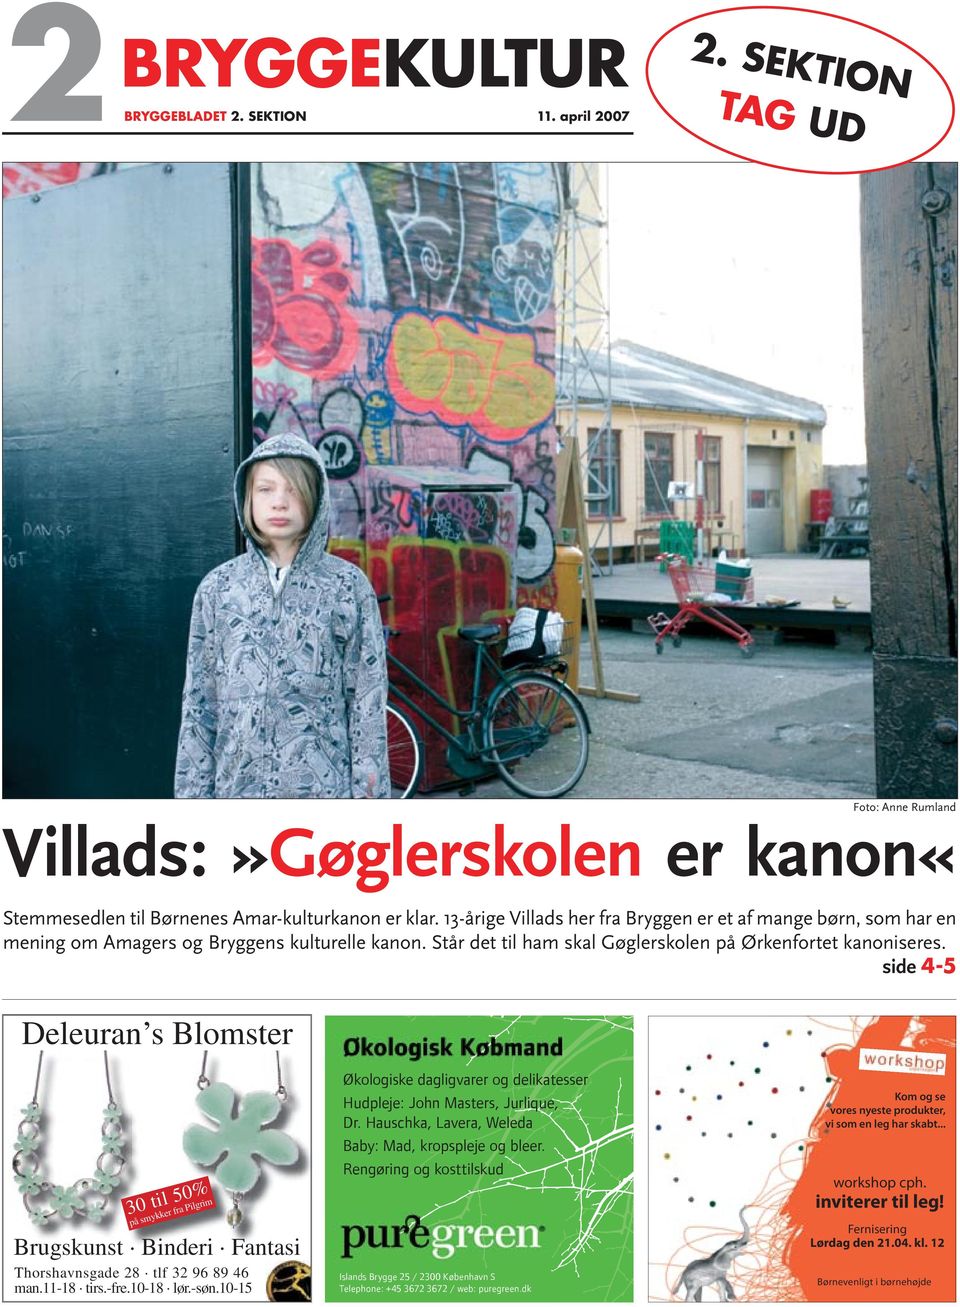 Foto: Anne Rumland Villads:»Gøglerskolen er kanon« - PDF Gratis download